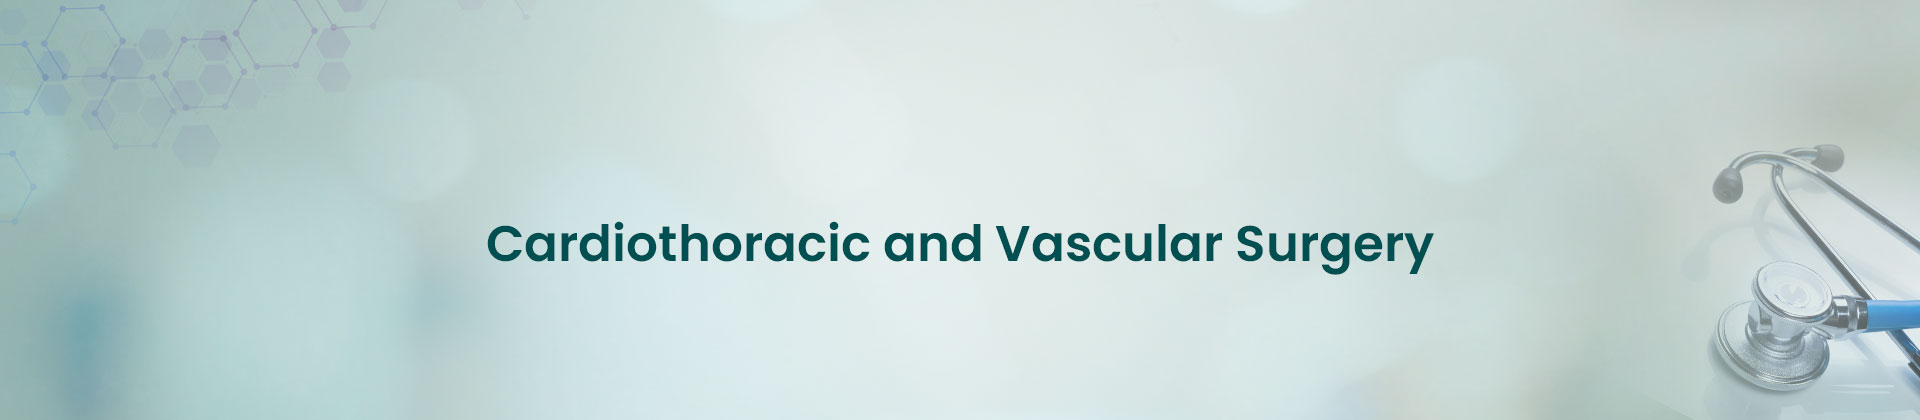 Cardiothoracic and Vascular Surgery